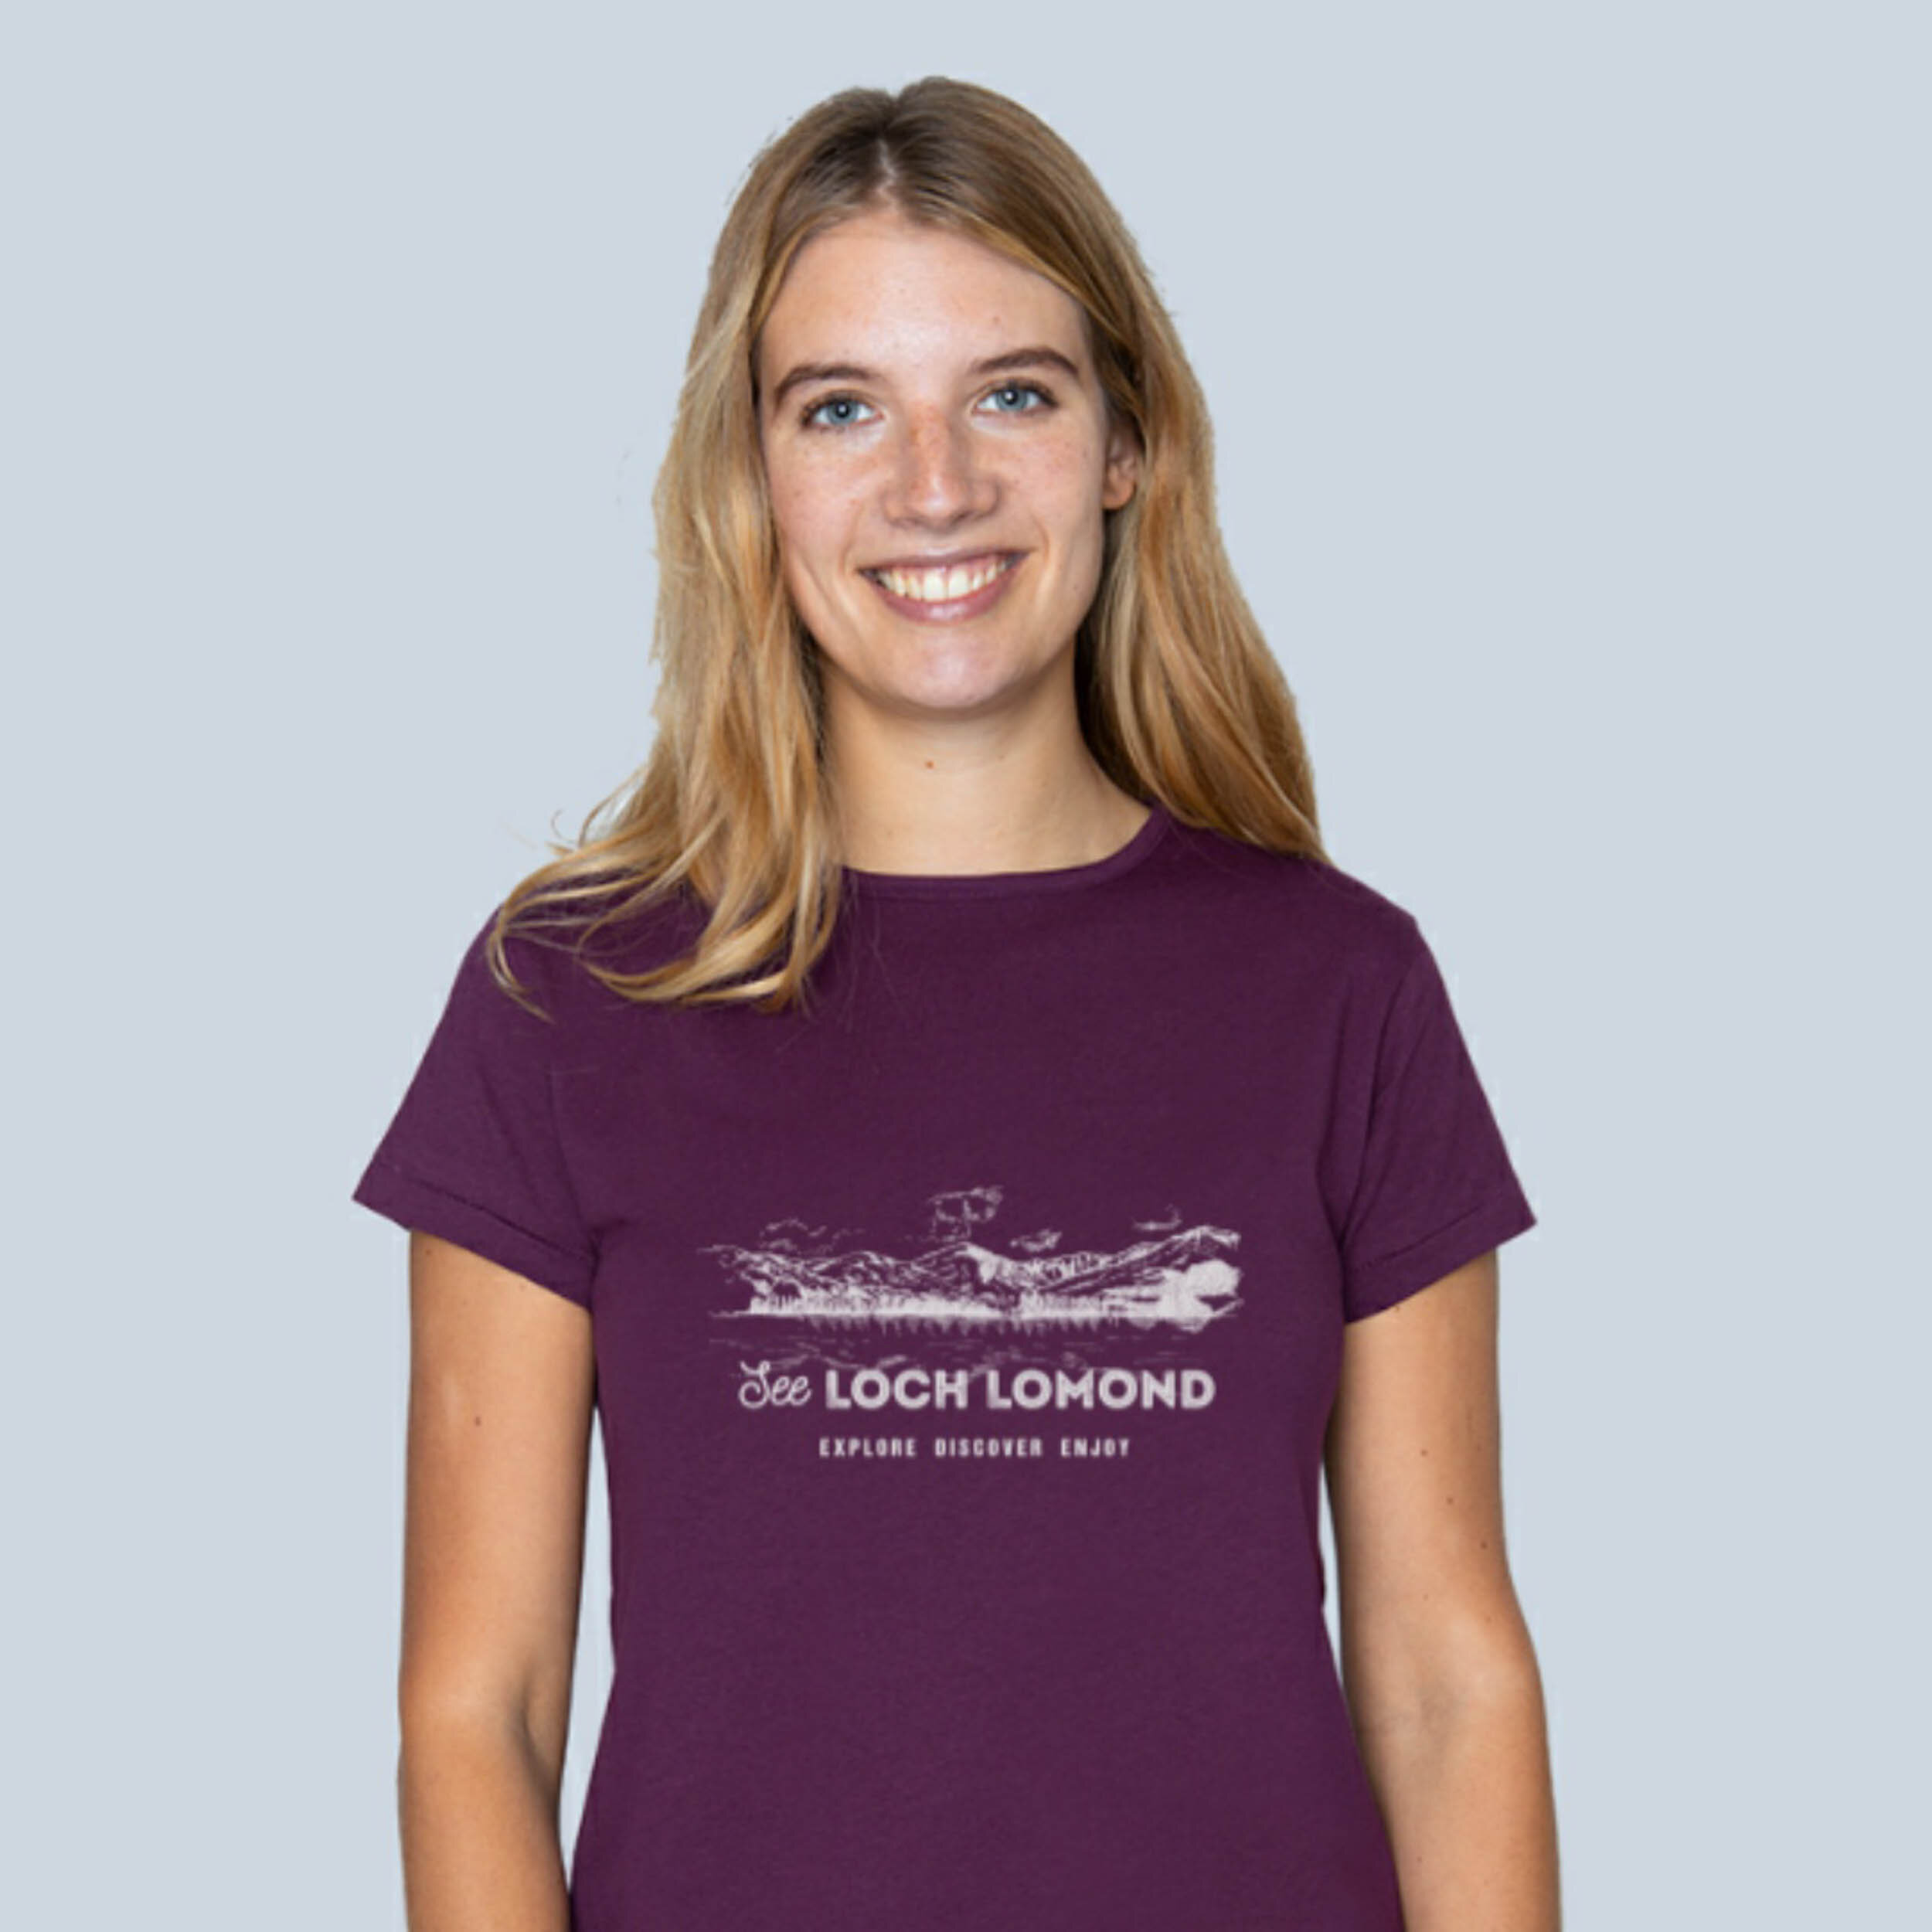 T-Shirts-See-Loch-Lomond-300485.jpg